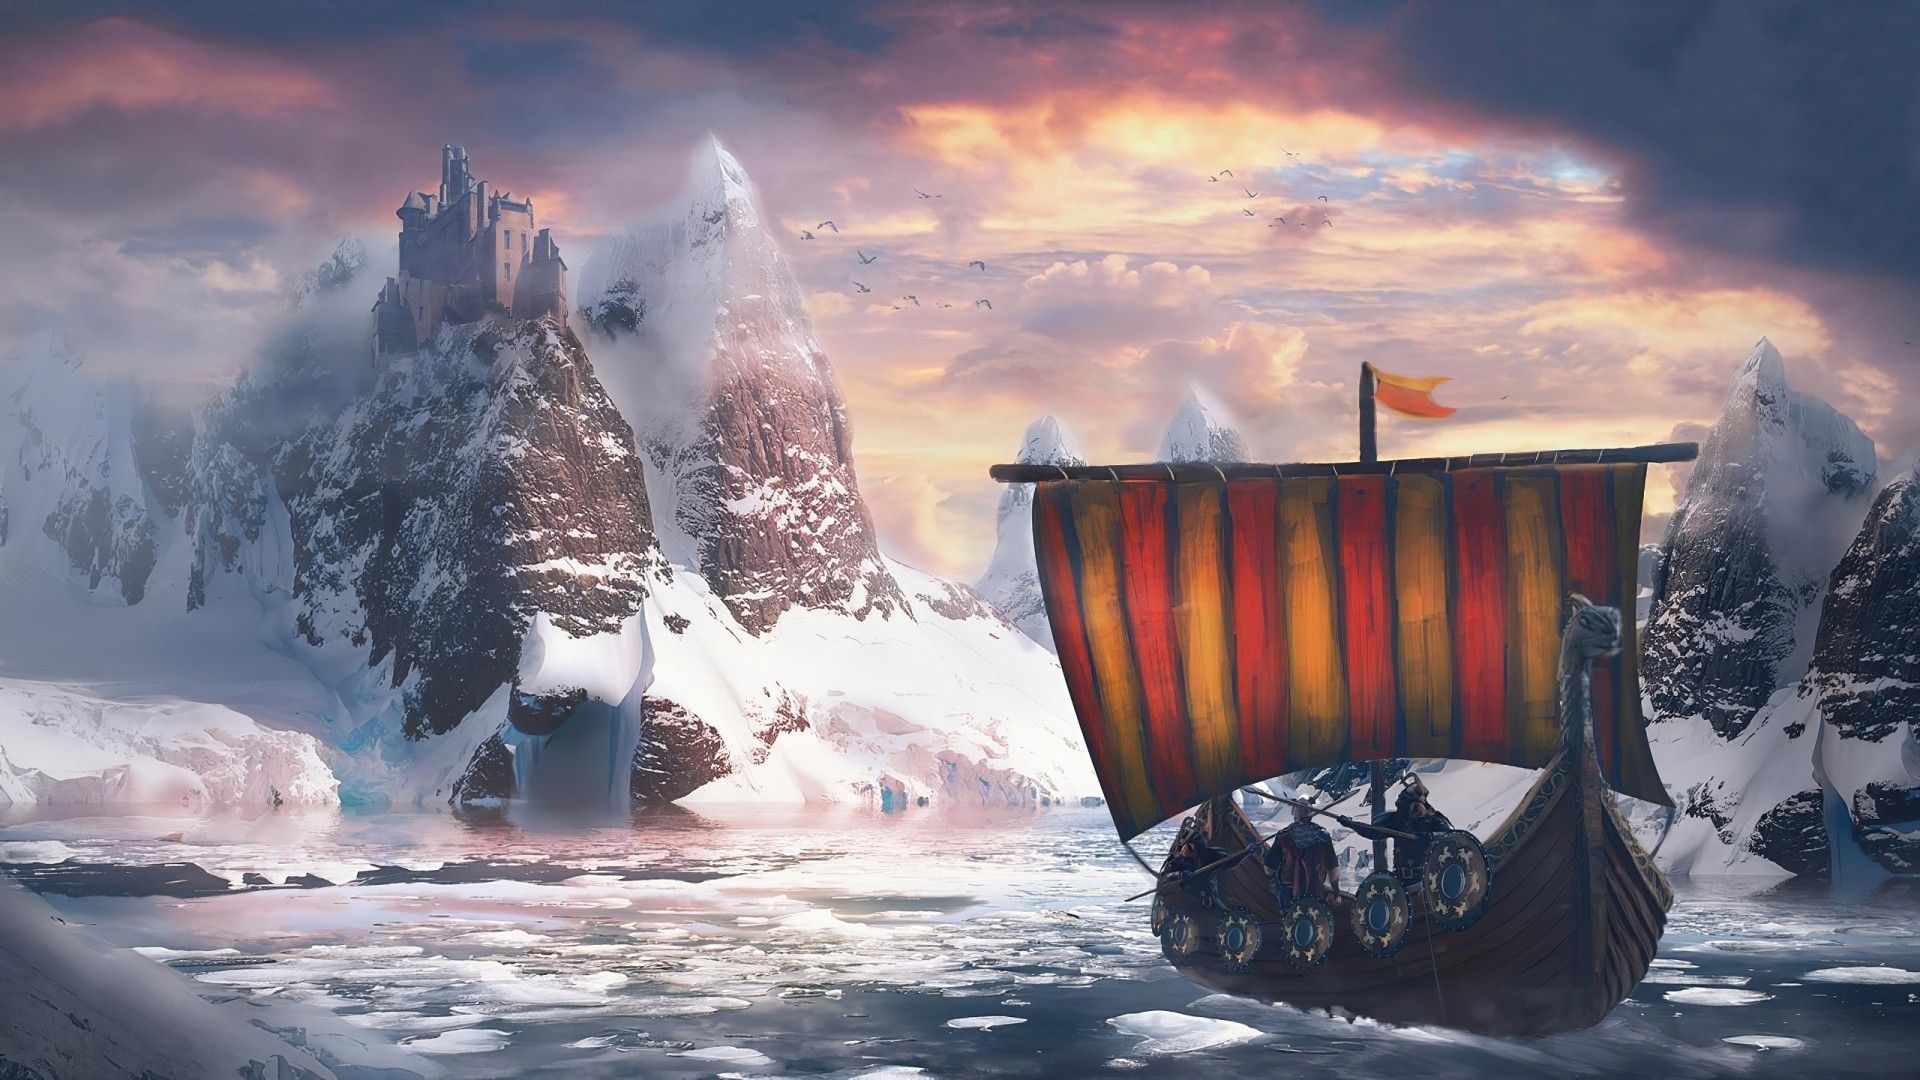 Download 1920x1080 Viking Ship, Winter, Castle, Mountain, Artwork, Clouds, Water Wallpaper for Widescreen